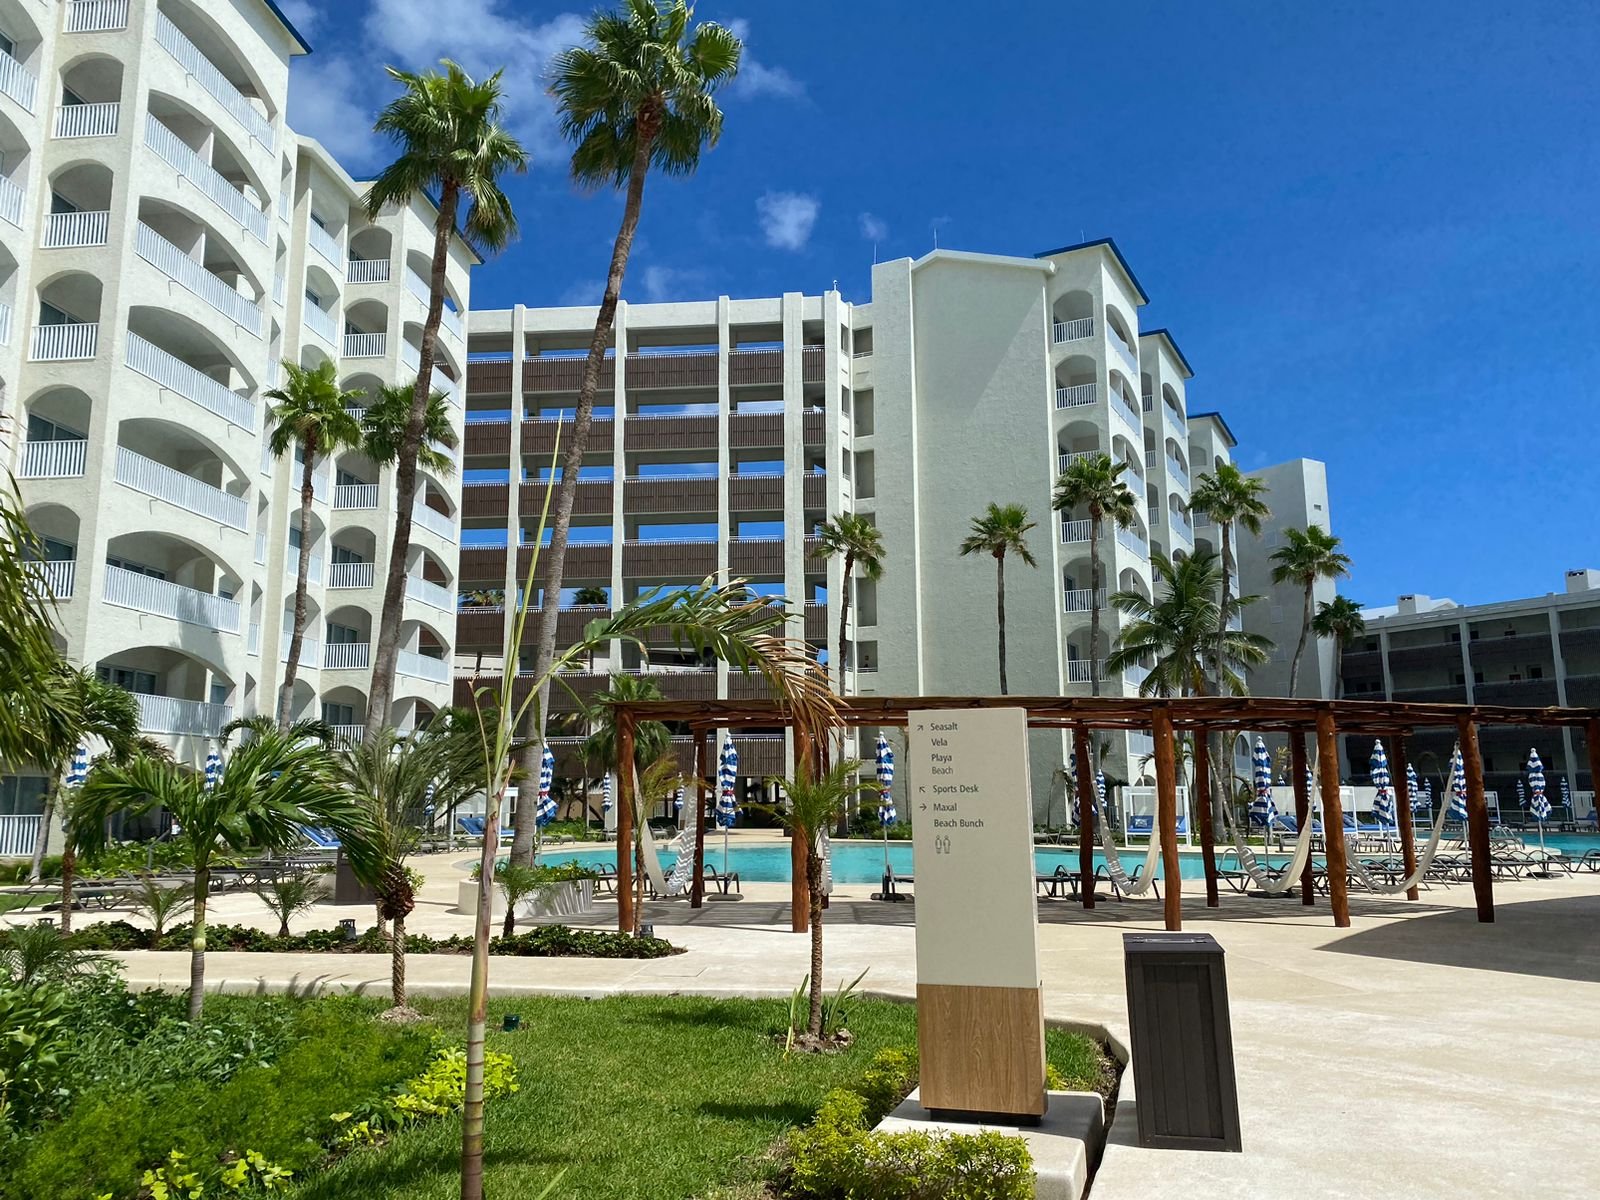 Hilton inaugura su nuevo resort all-inclusive en Cancún